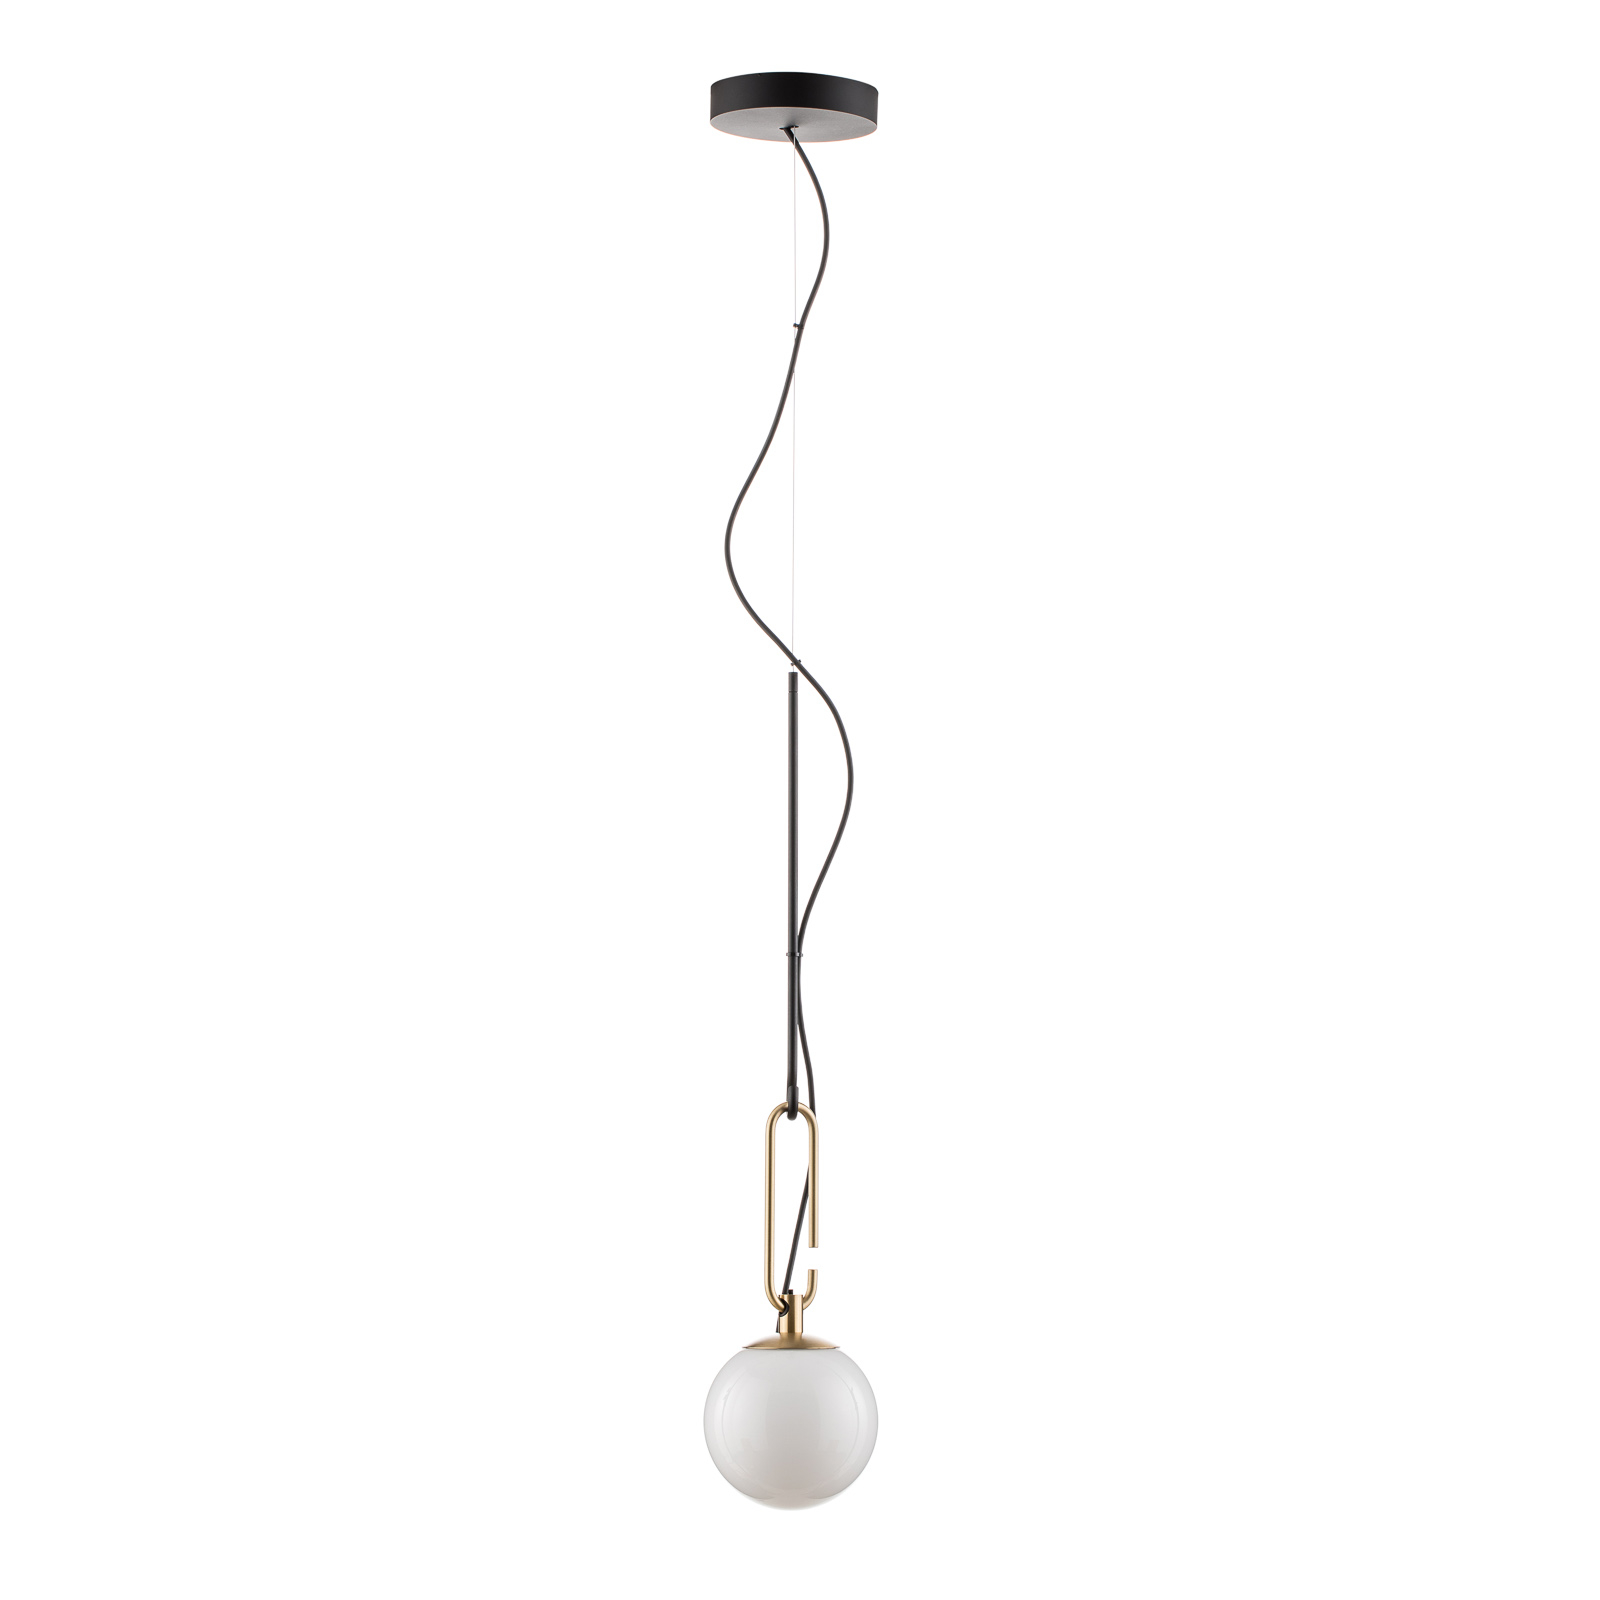 Artemide nh glazen hanglamp, Ø 14 cm